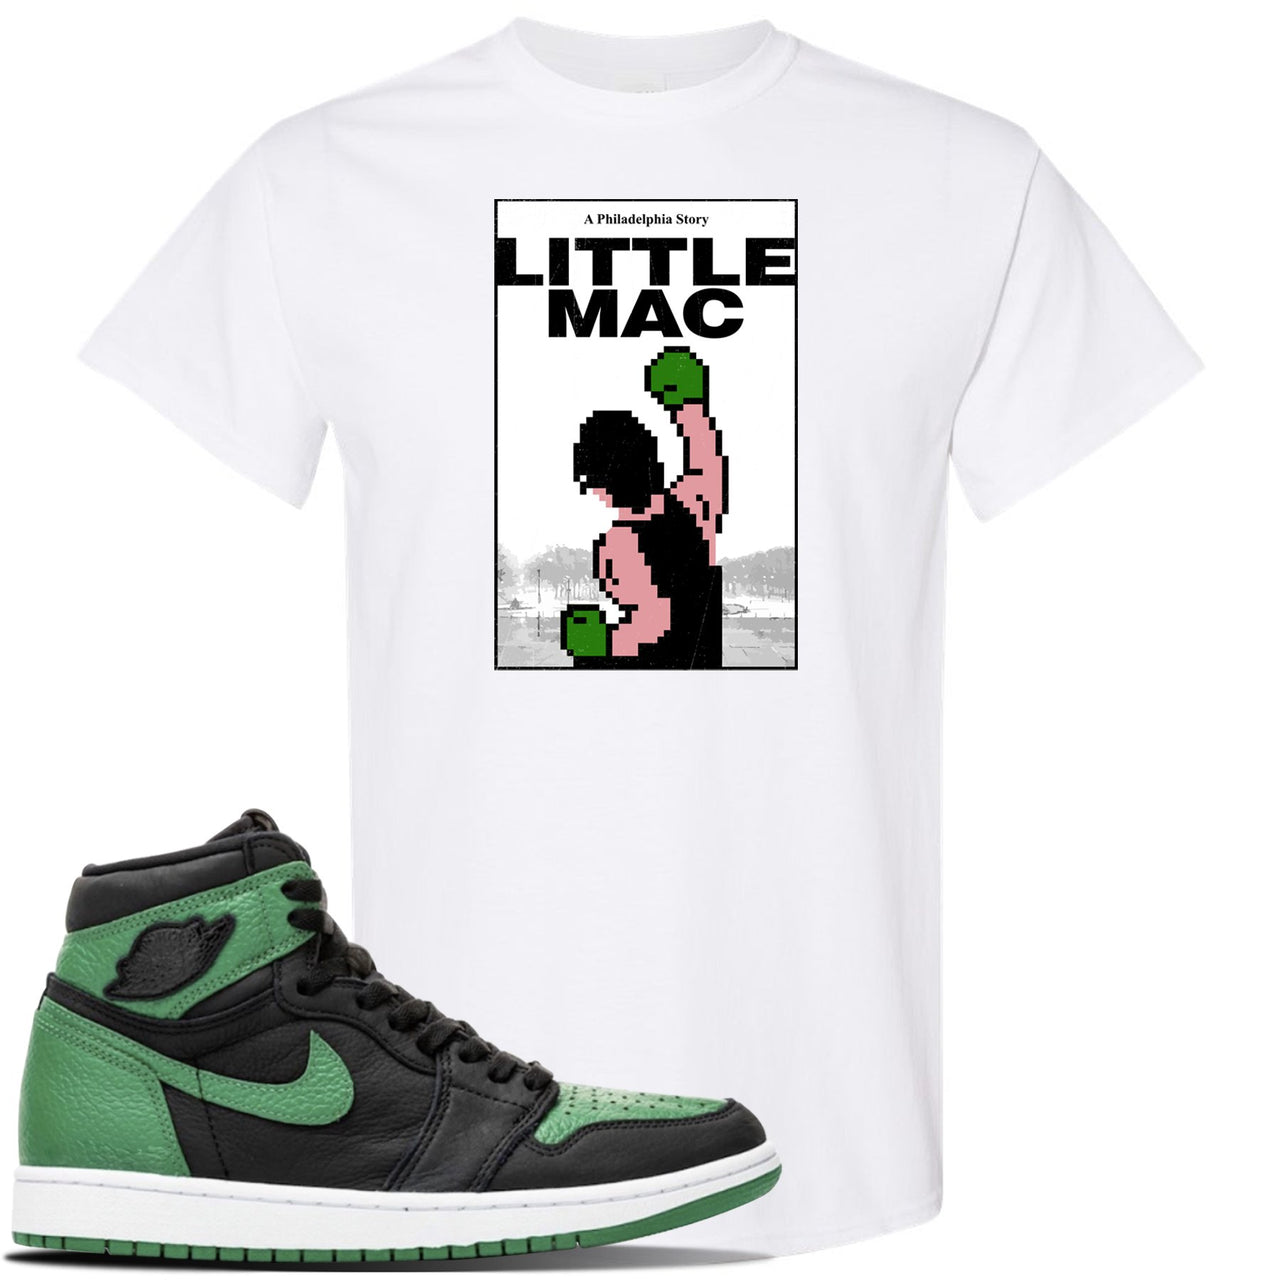 Jordan 1 Retro High OG Pine Green Gym Sneaker White T Shirt | Tees to match Air Jordan 1 Retro High OG Pine Green Gym Shoes | Little Mac A Philly Story